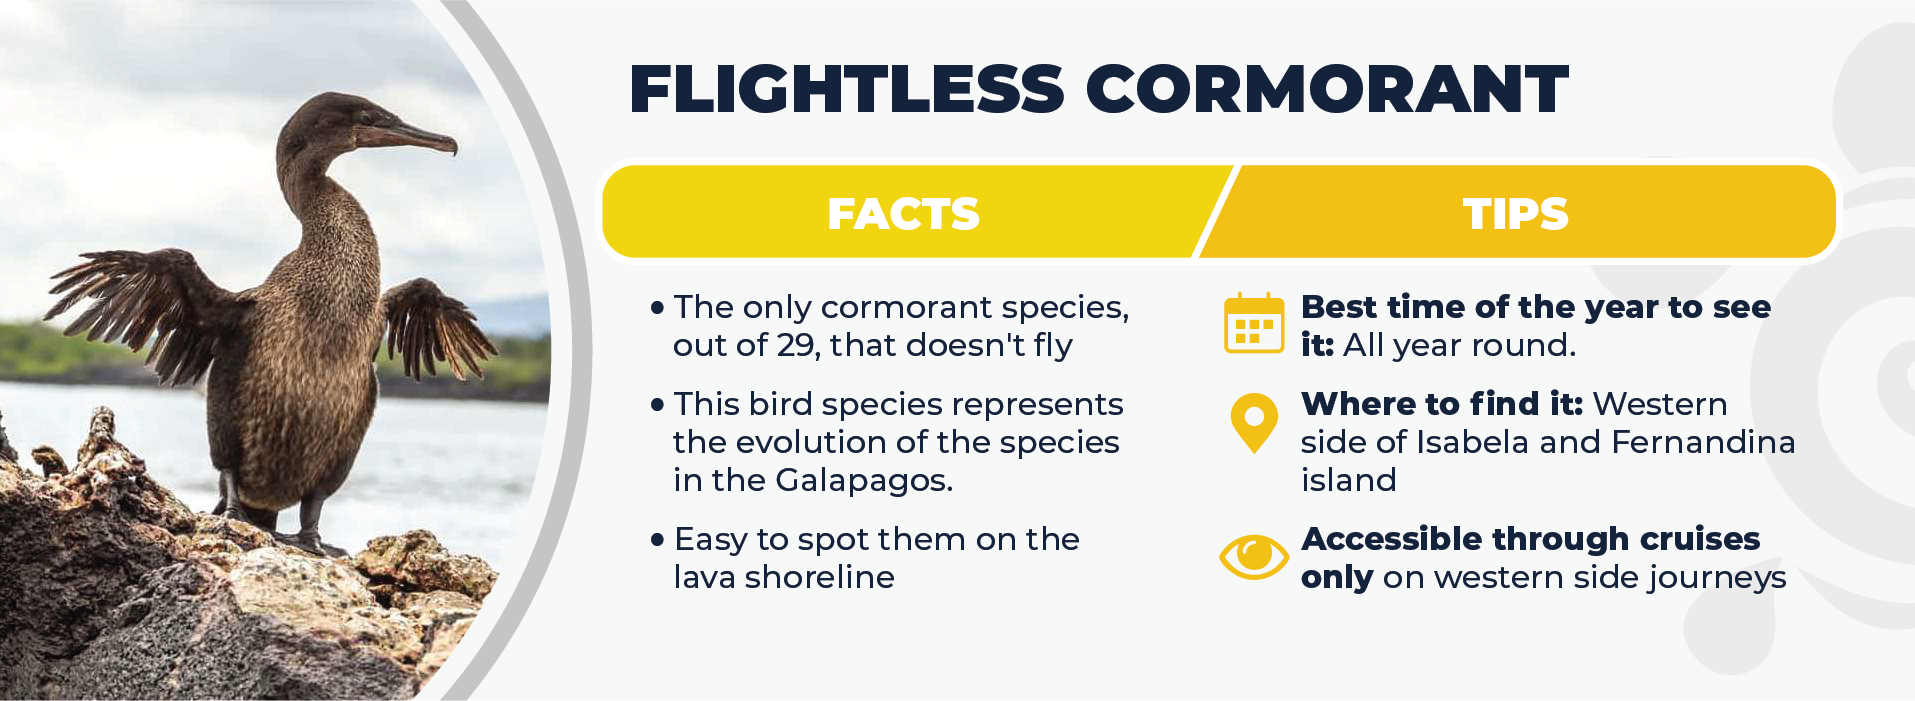 Flightless Cormorant Facts